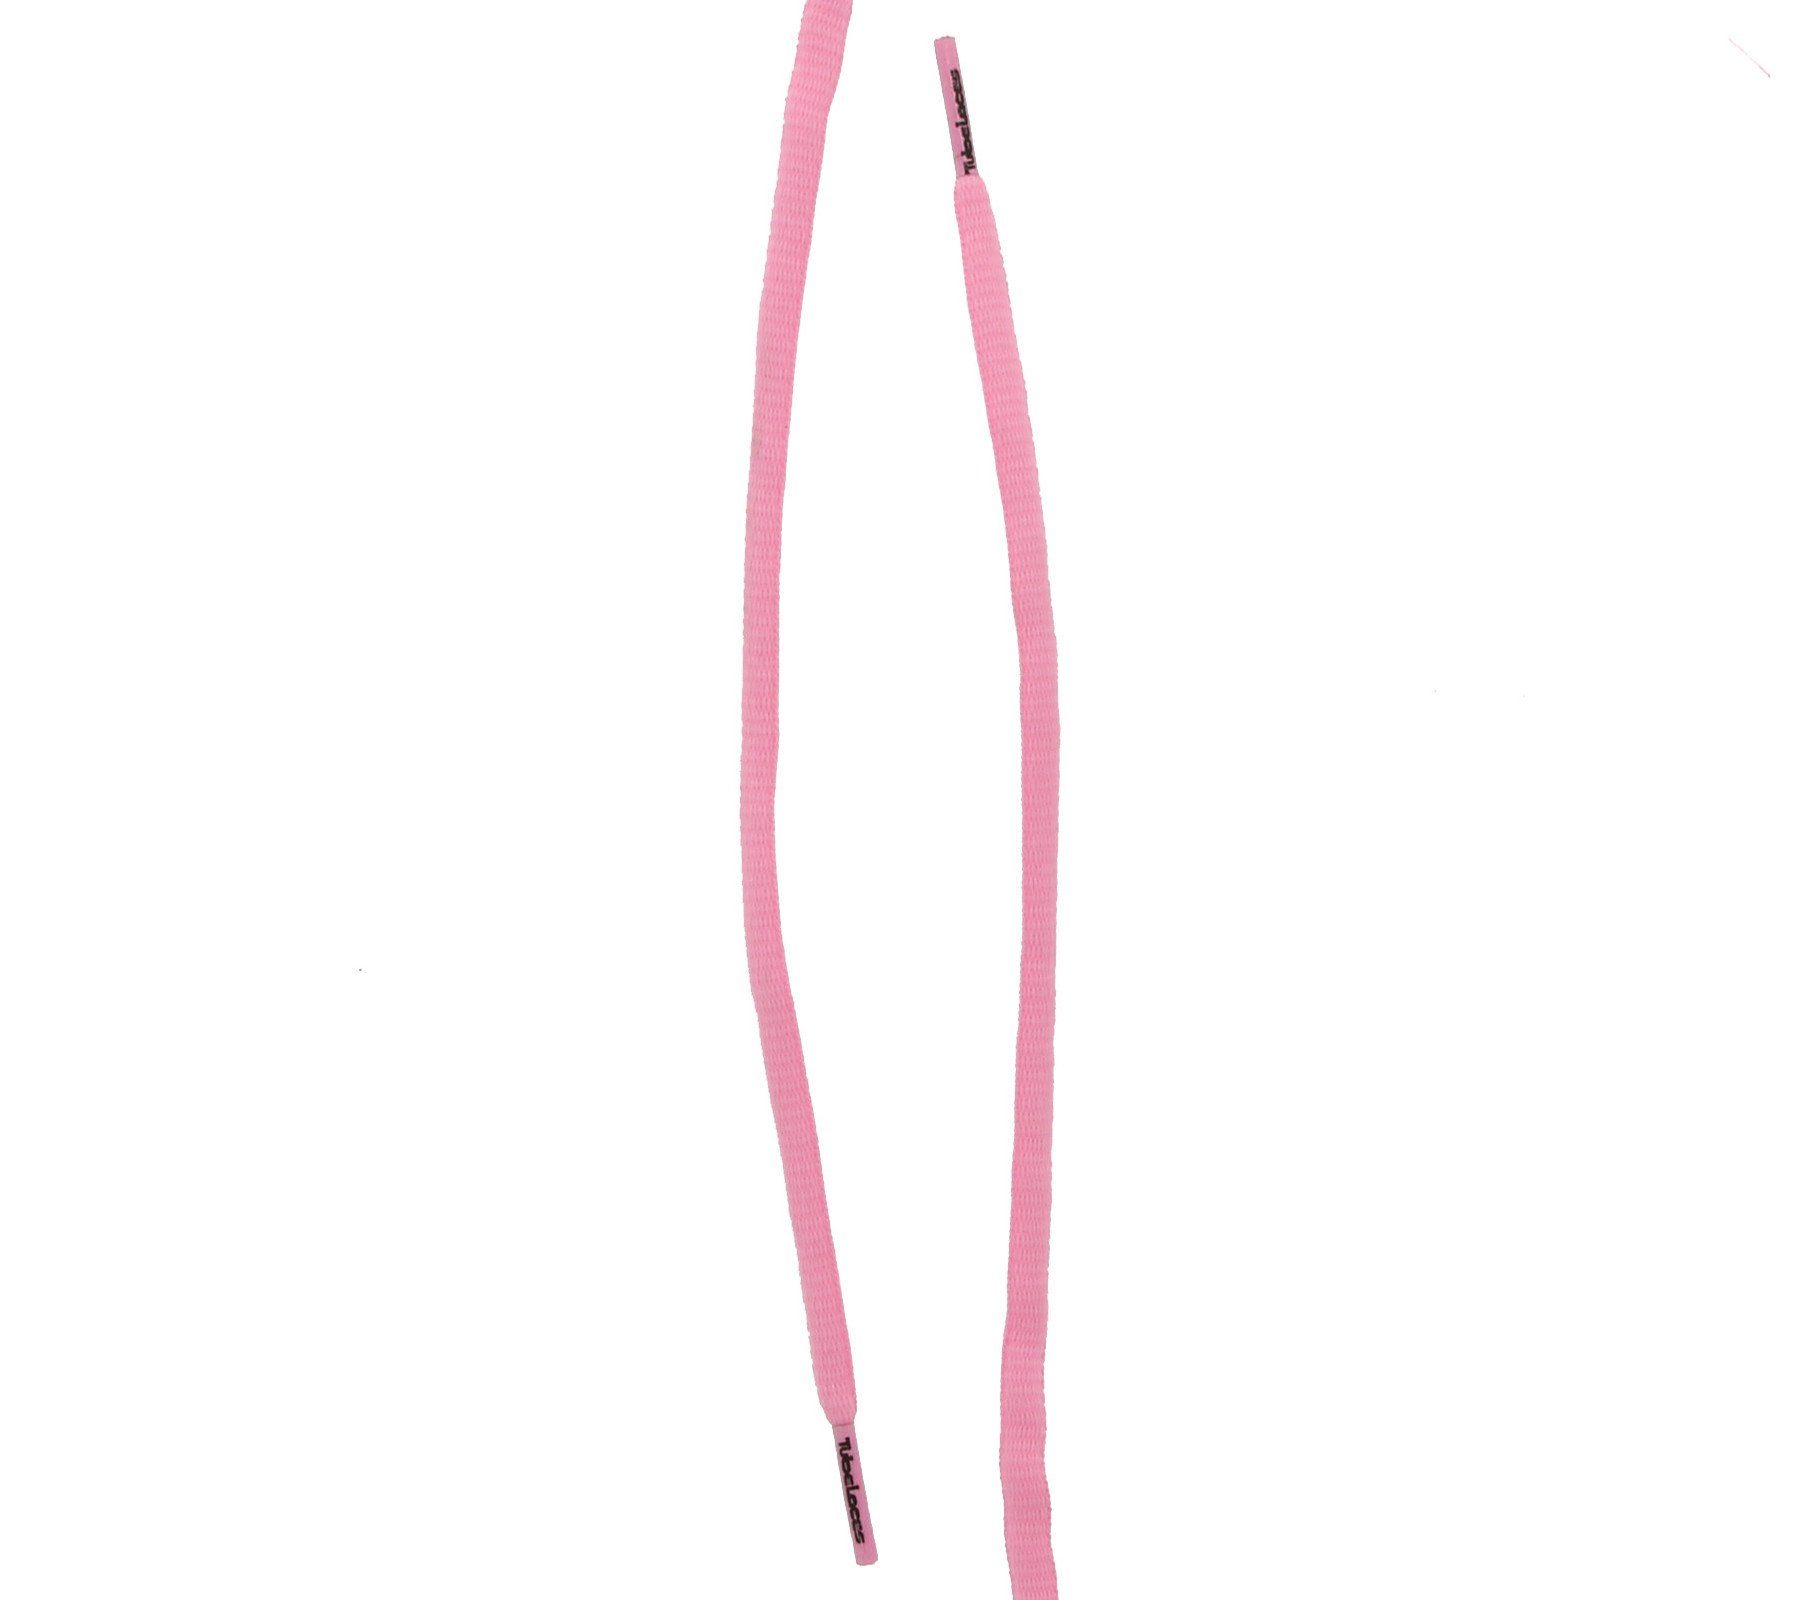 Schnürbänder neonfarbene Tubelaces Schuh TubeLaces Schnürsenkel Pink Schuhbänder Schnürsenkel